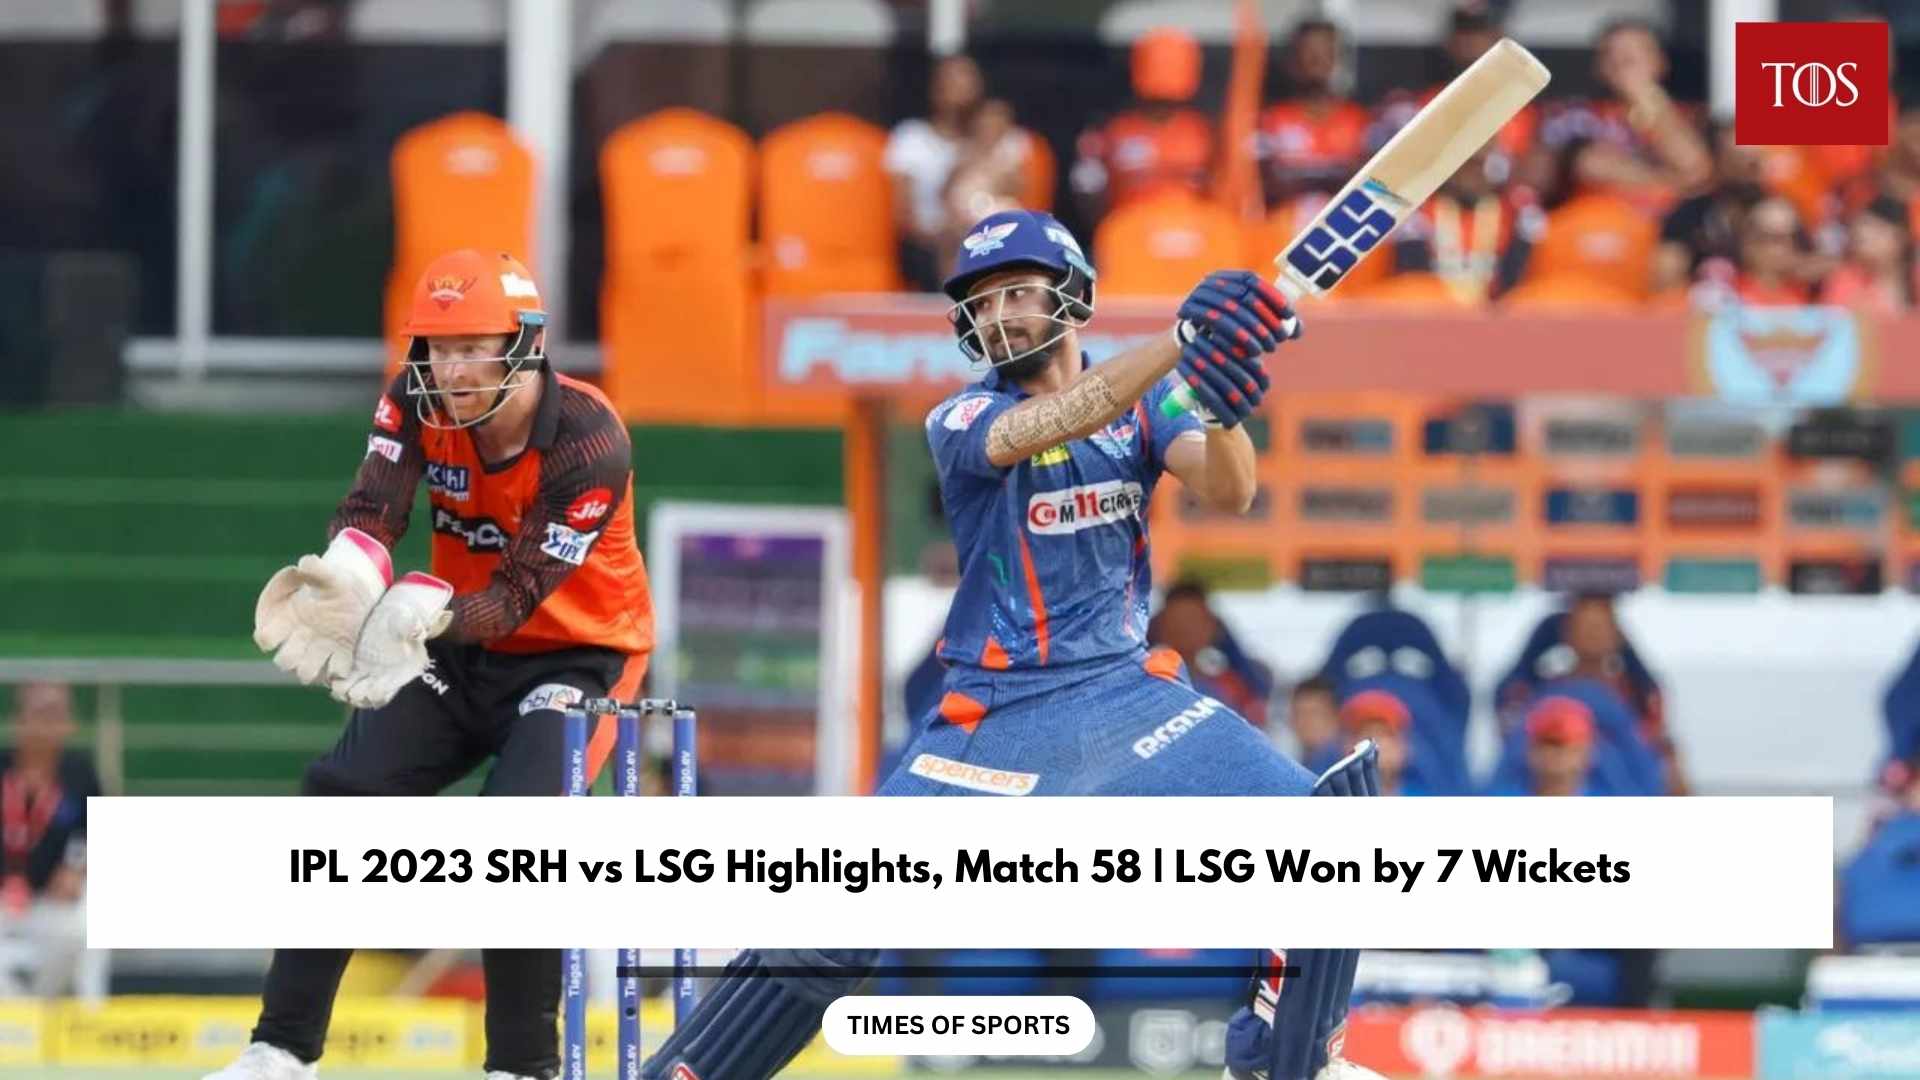 IPL 2023 SRH vs LSG Highlights, Match 58 CricAngel